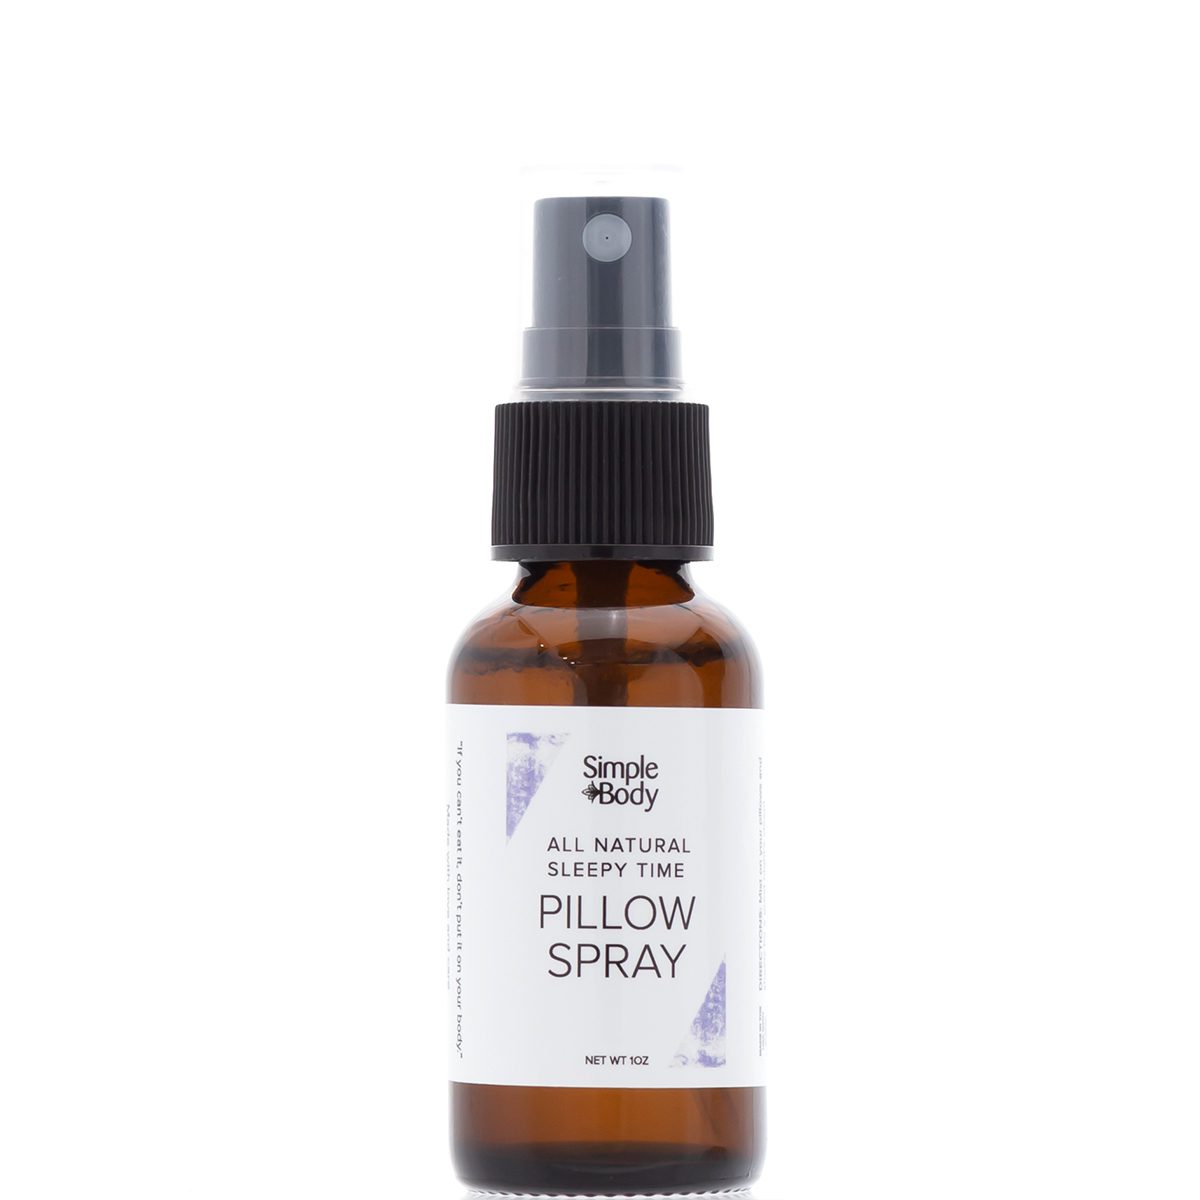 Pillow Spray, Sleep Better When Traveling